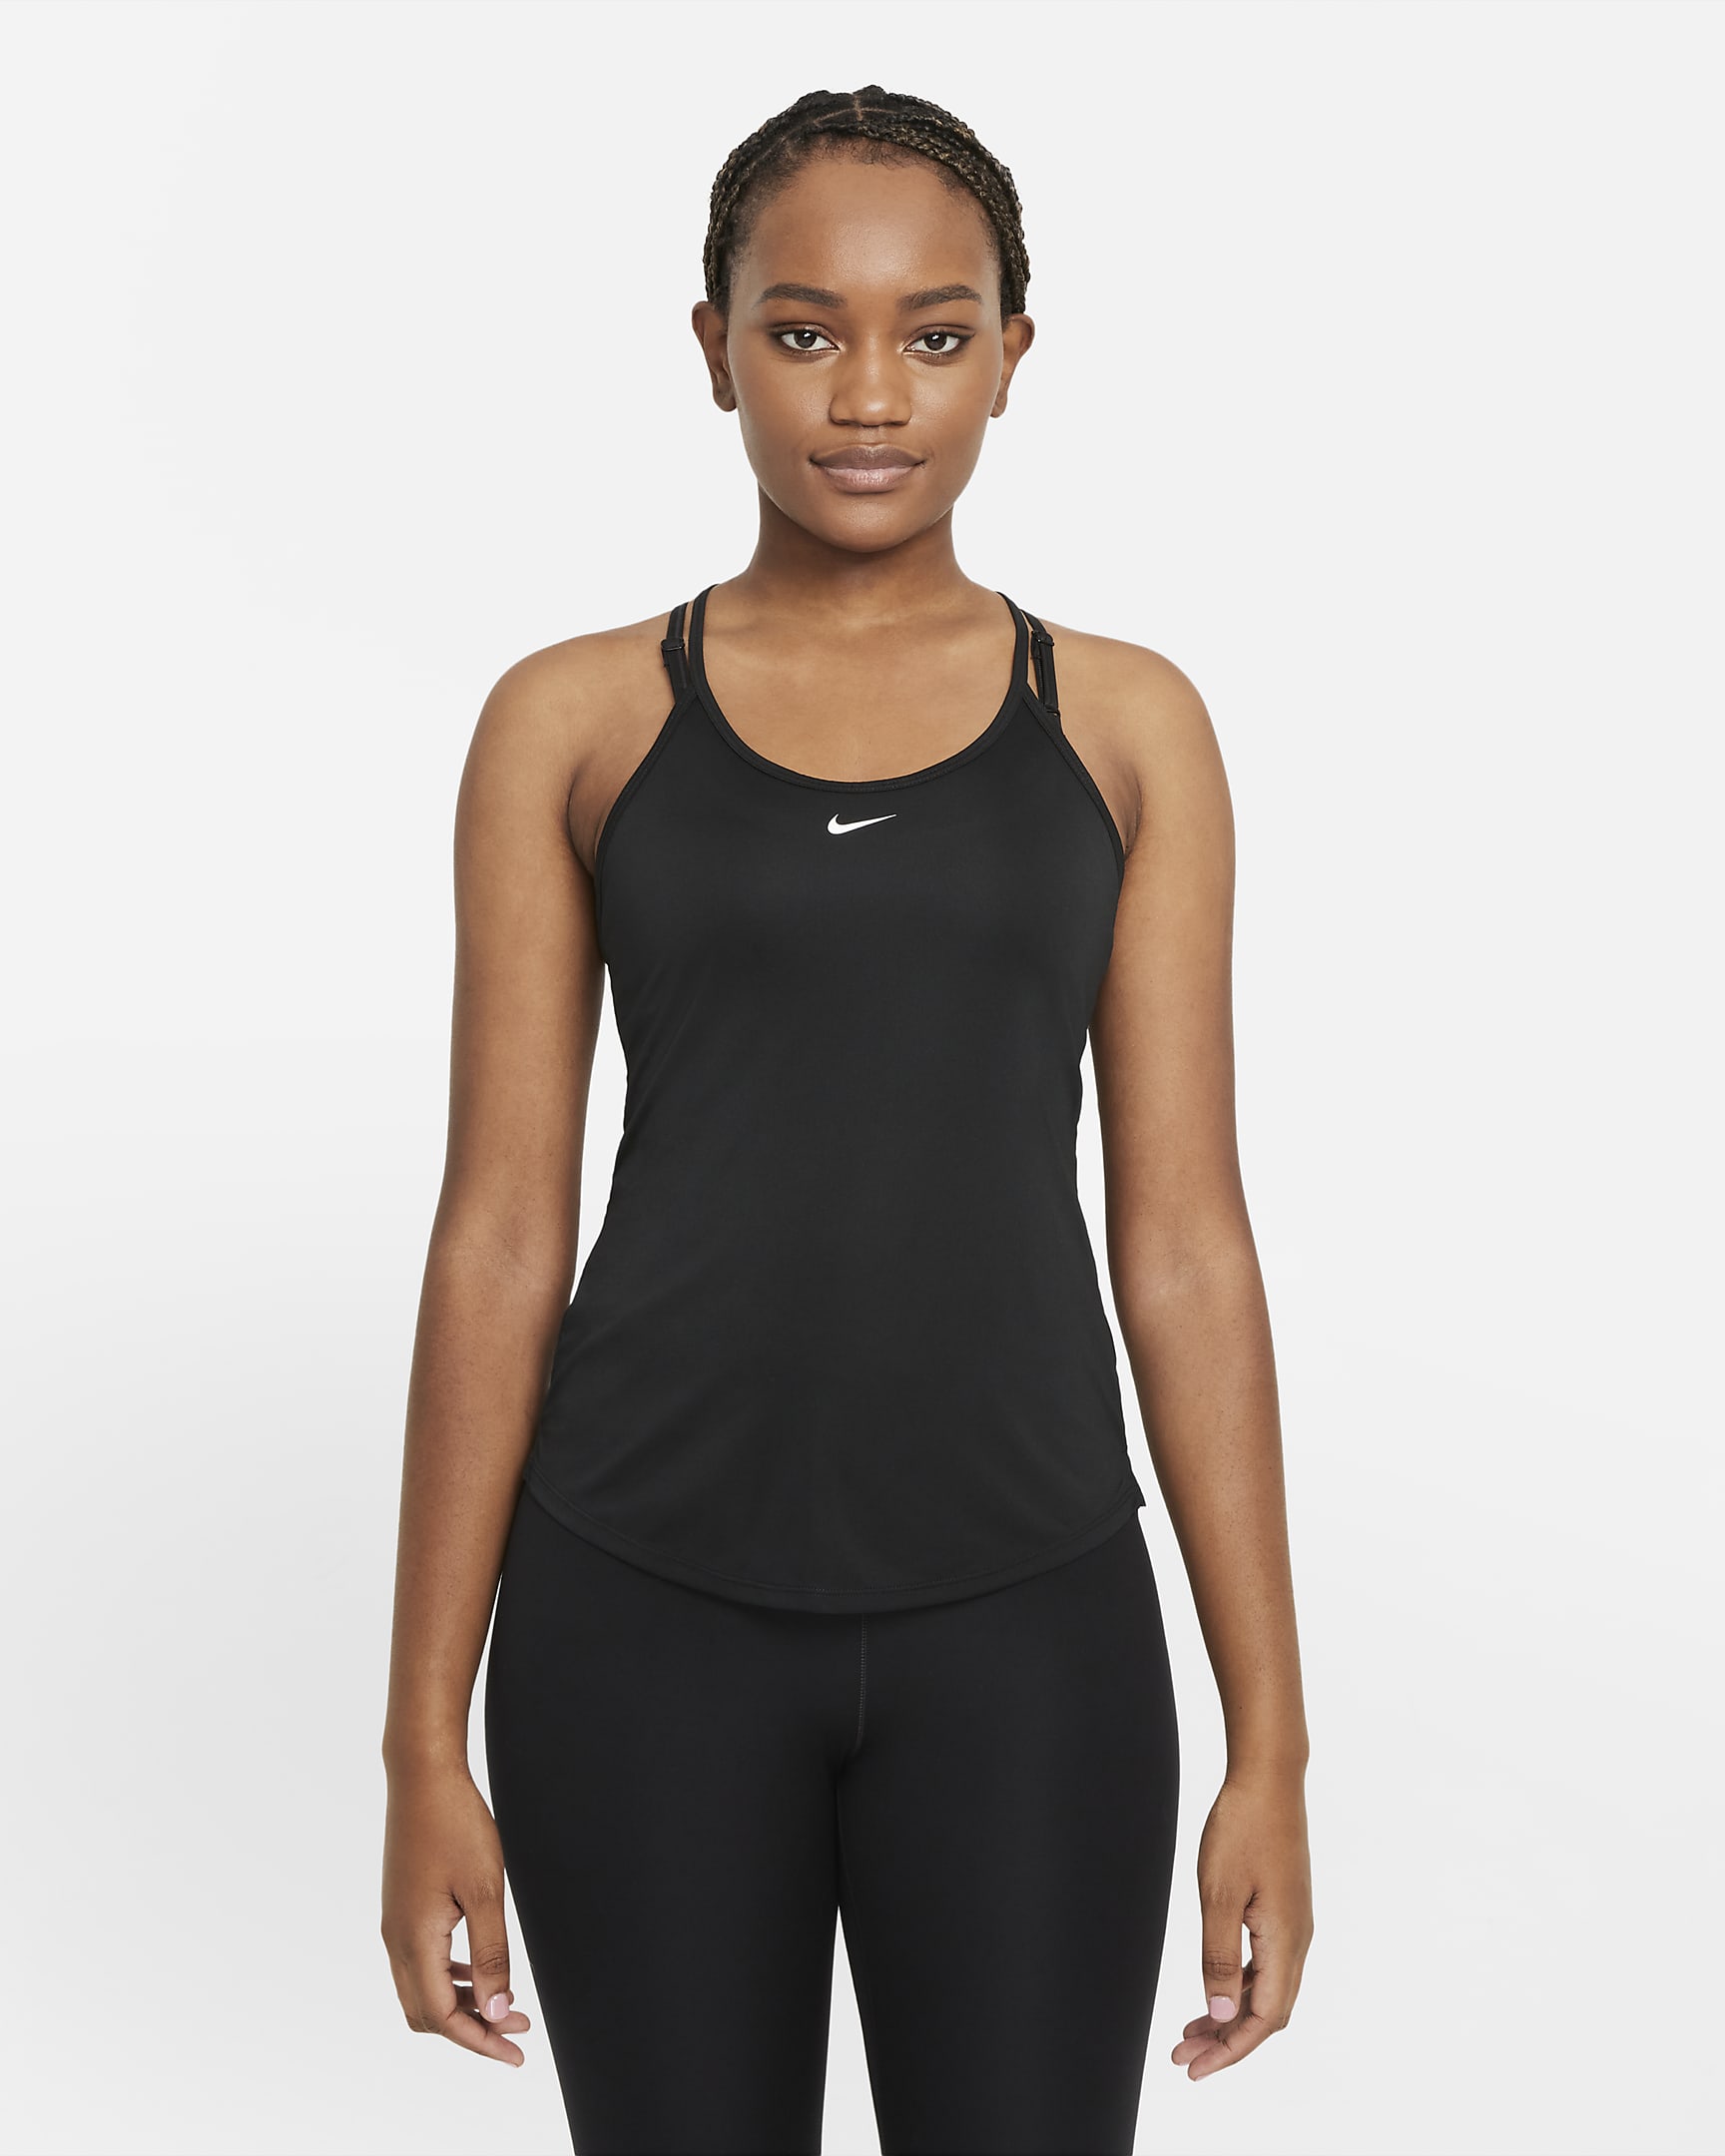 Nike Dri-FIT One Elastika Women's Standard Fit Tank Top - Black/White